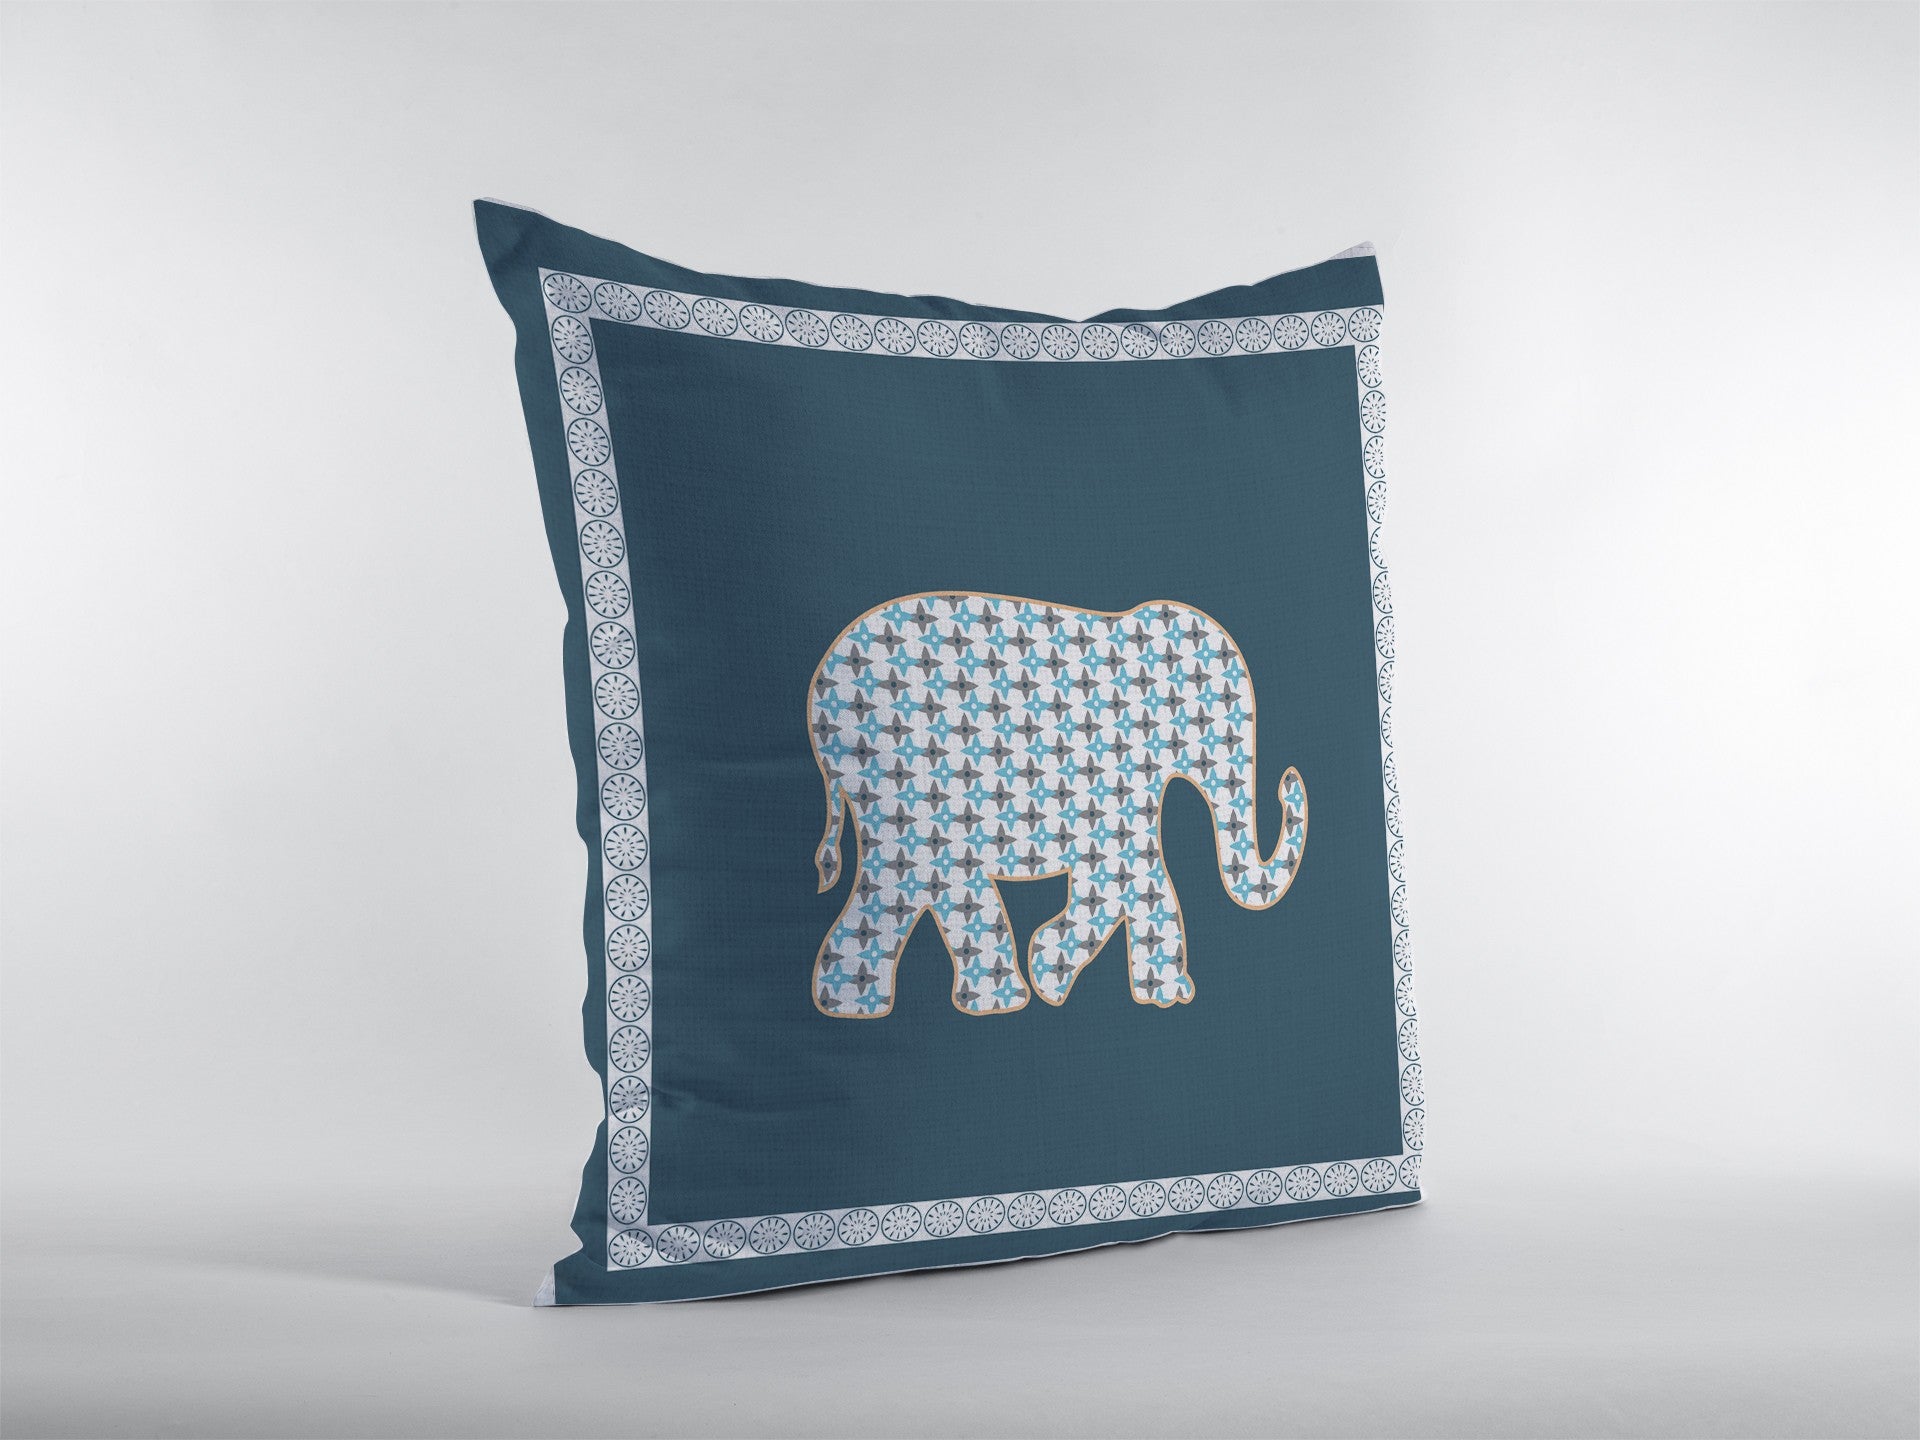 18” Spruce Blue Elephant Indoor Outdoor Throw Pillow